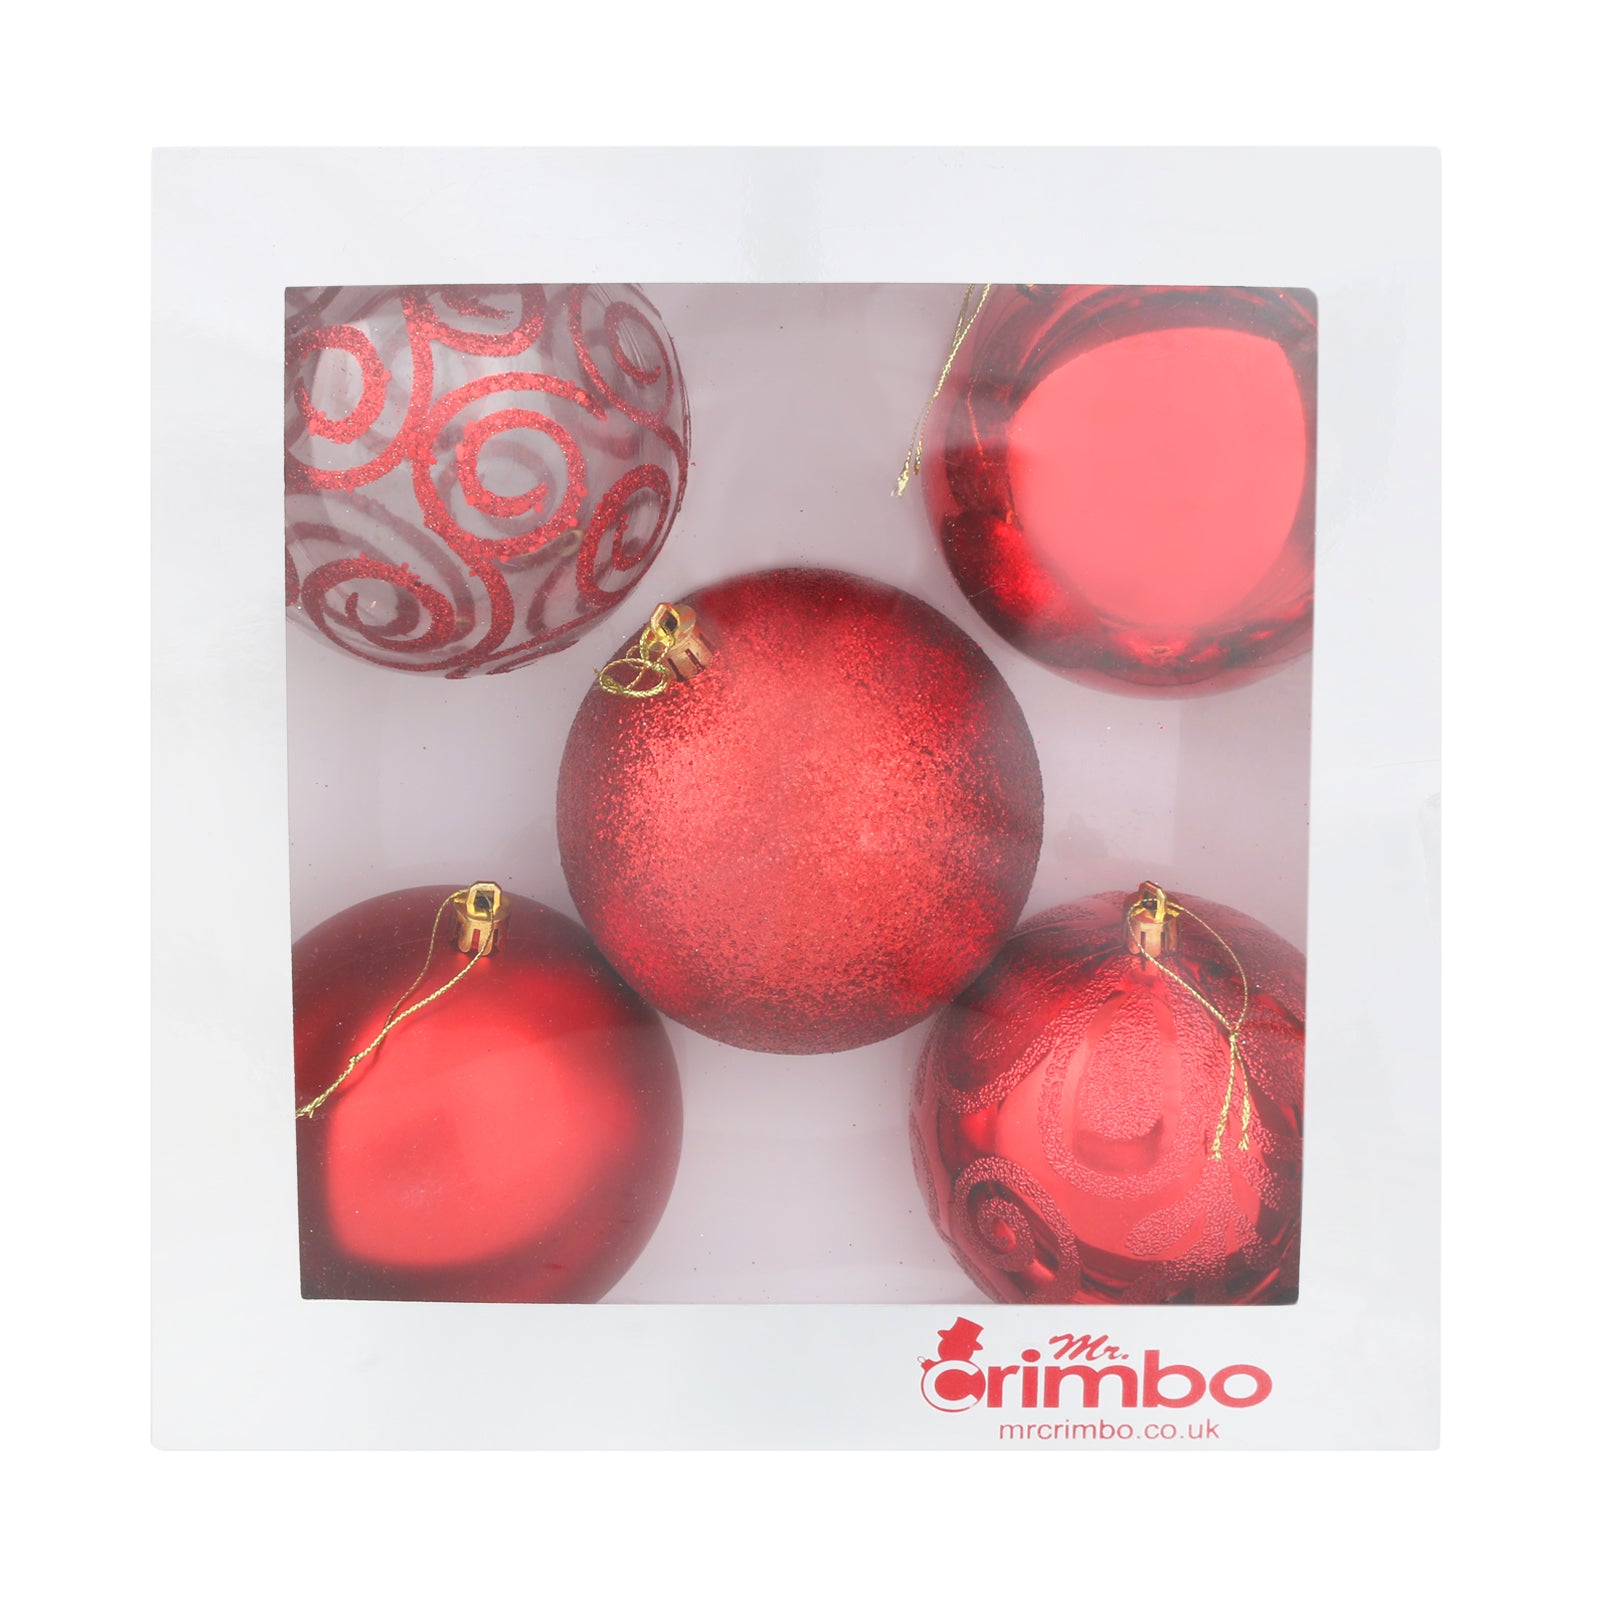 Mr Crimbo 5 x 10cm Christmas Tree Baubles Various Colours - MrCrimbo.co.uk -XS5690 - Red -Baubles